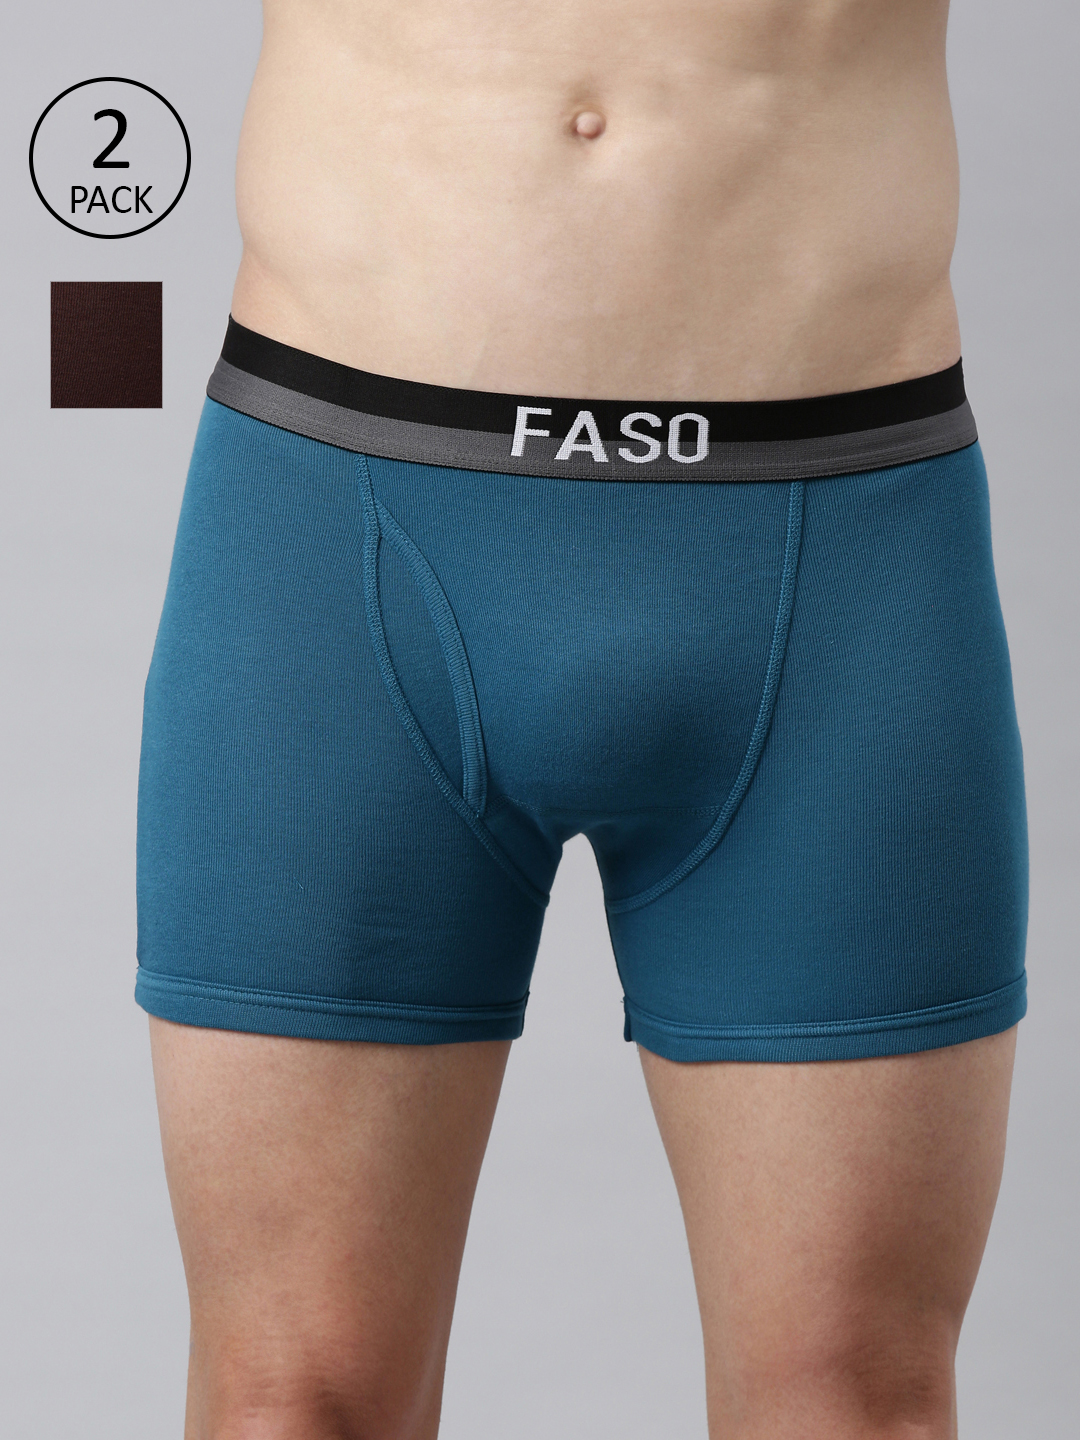 Buy FASO Black Solid Organic Cotton Regular Fit Men's Briefs